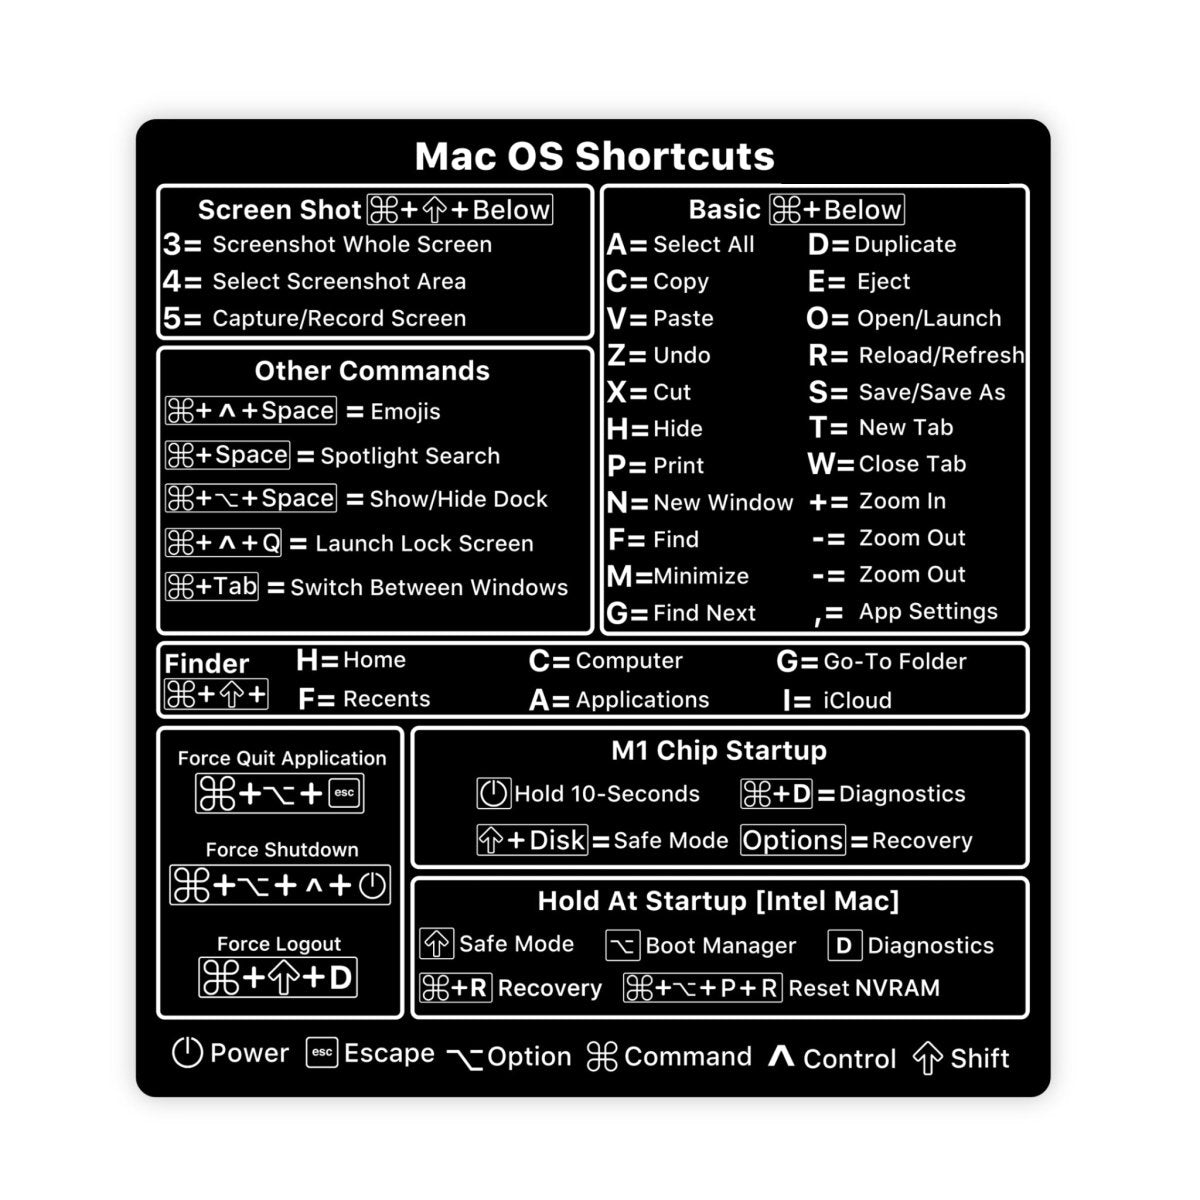 [M1/M2/Intel] Pastel Mac OS Shortcut Sticker [Works With All Mac Laptops] - stickerbull[M1/M2/Intel] Pastel Mac OS Shortcut Sticker [Works With All Mac Laptops]Retail StickerstickerbullstickerbullTaylor_BlackMac [#77]Black[M1/M2/Intel] Pastel Mac OS Shortcut Sticker [Works With All Mac Laptops]